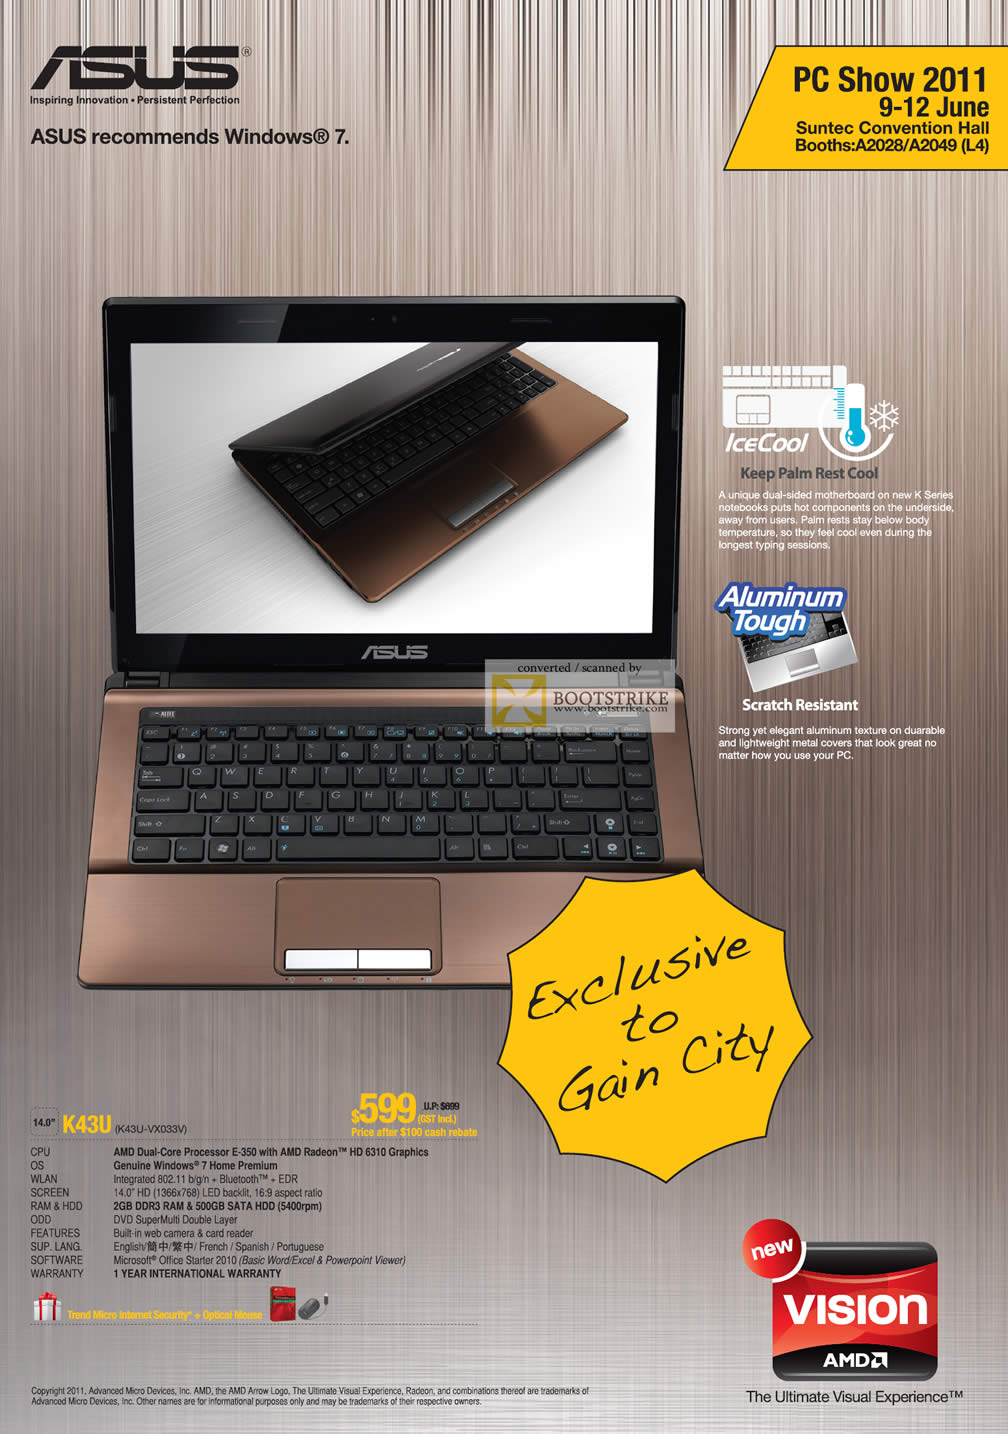 PC Show 2011 price list image brochure of ASUS Gain City Notebook K43U IceCool AMD